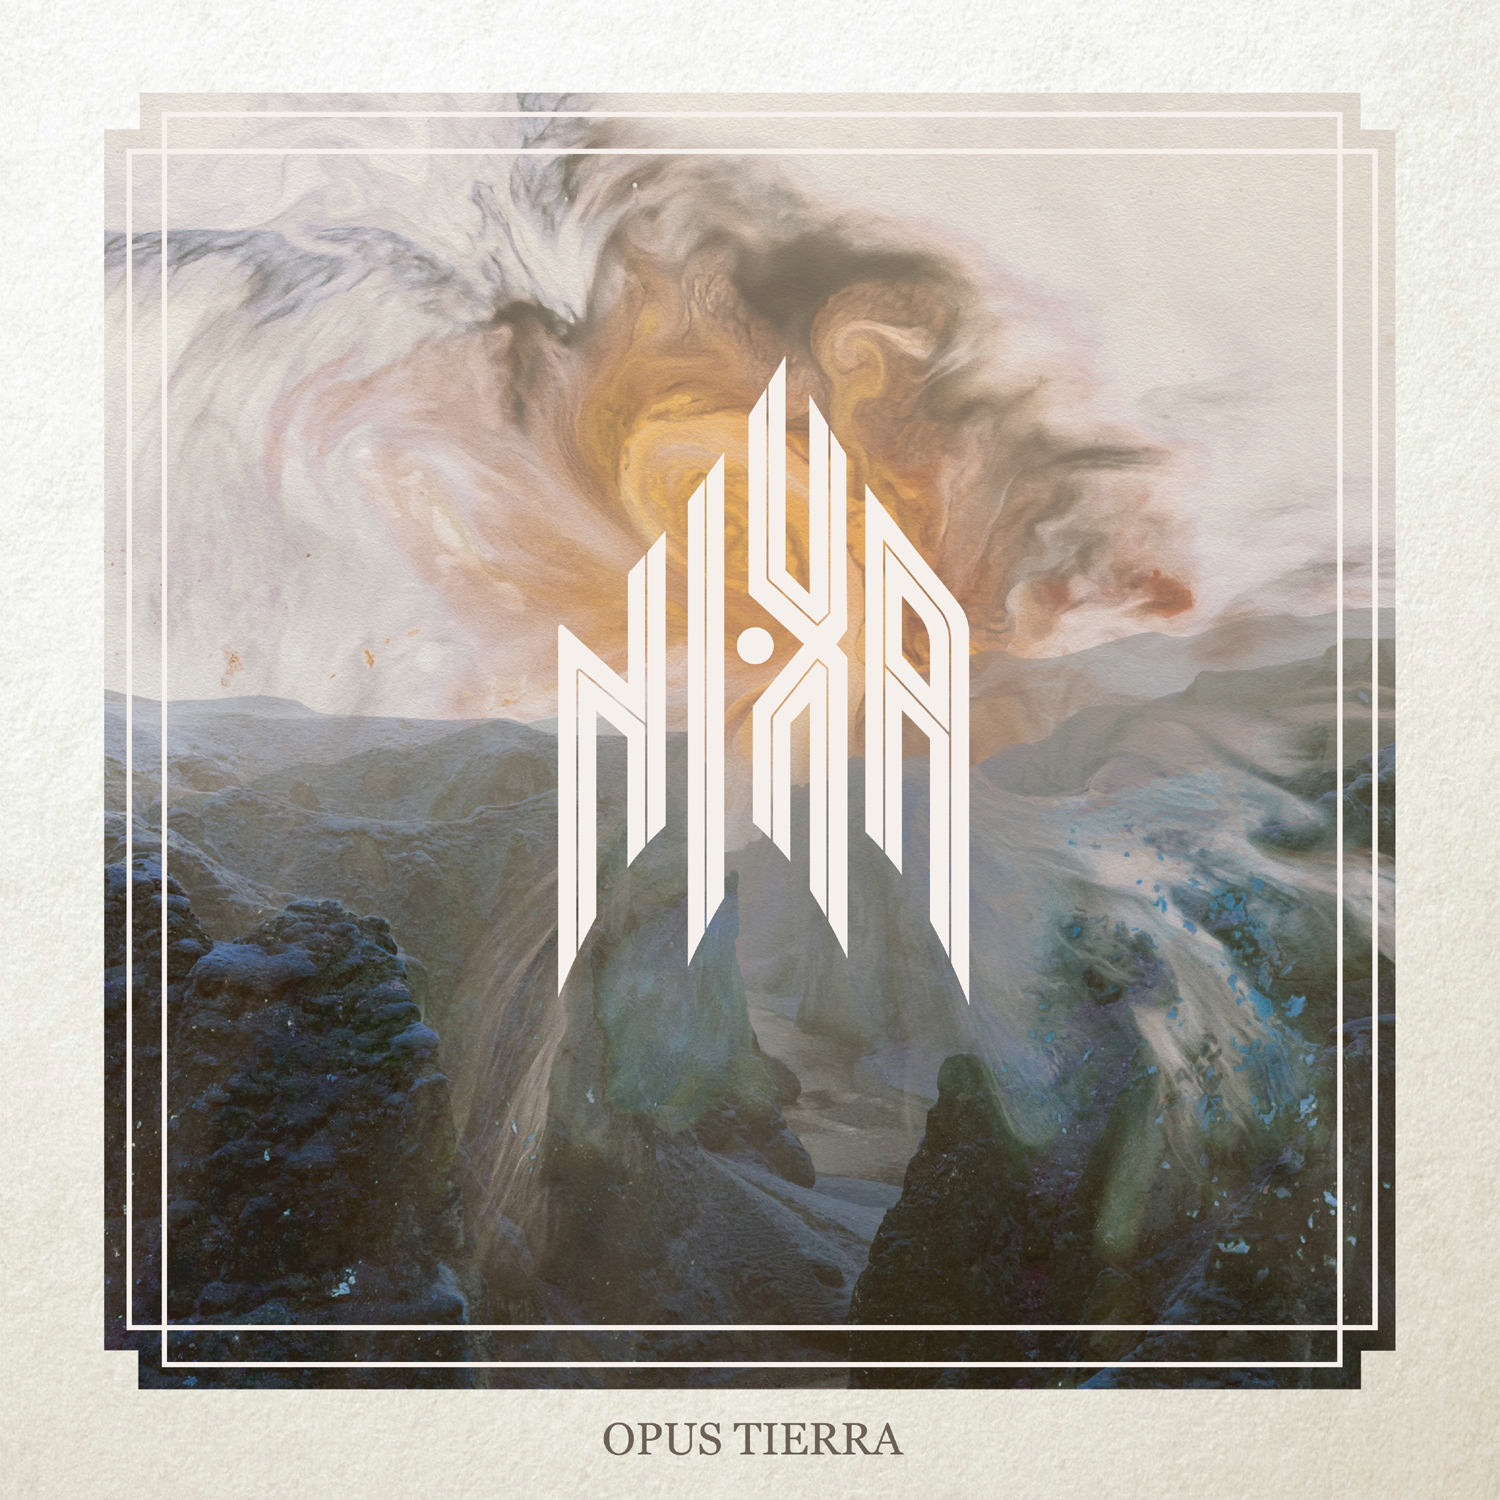 nixa-opus-tierra-im-chaos-der-zerstoerung-album-review